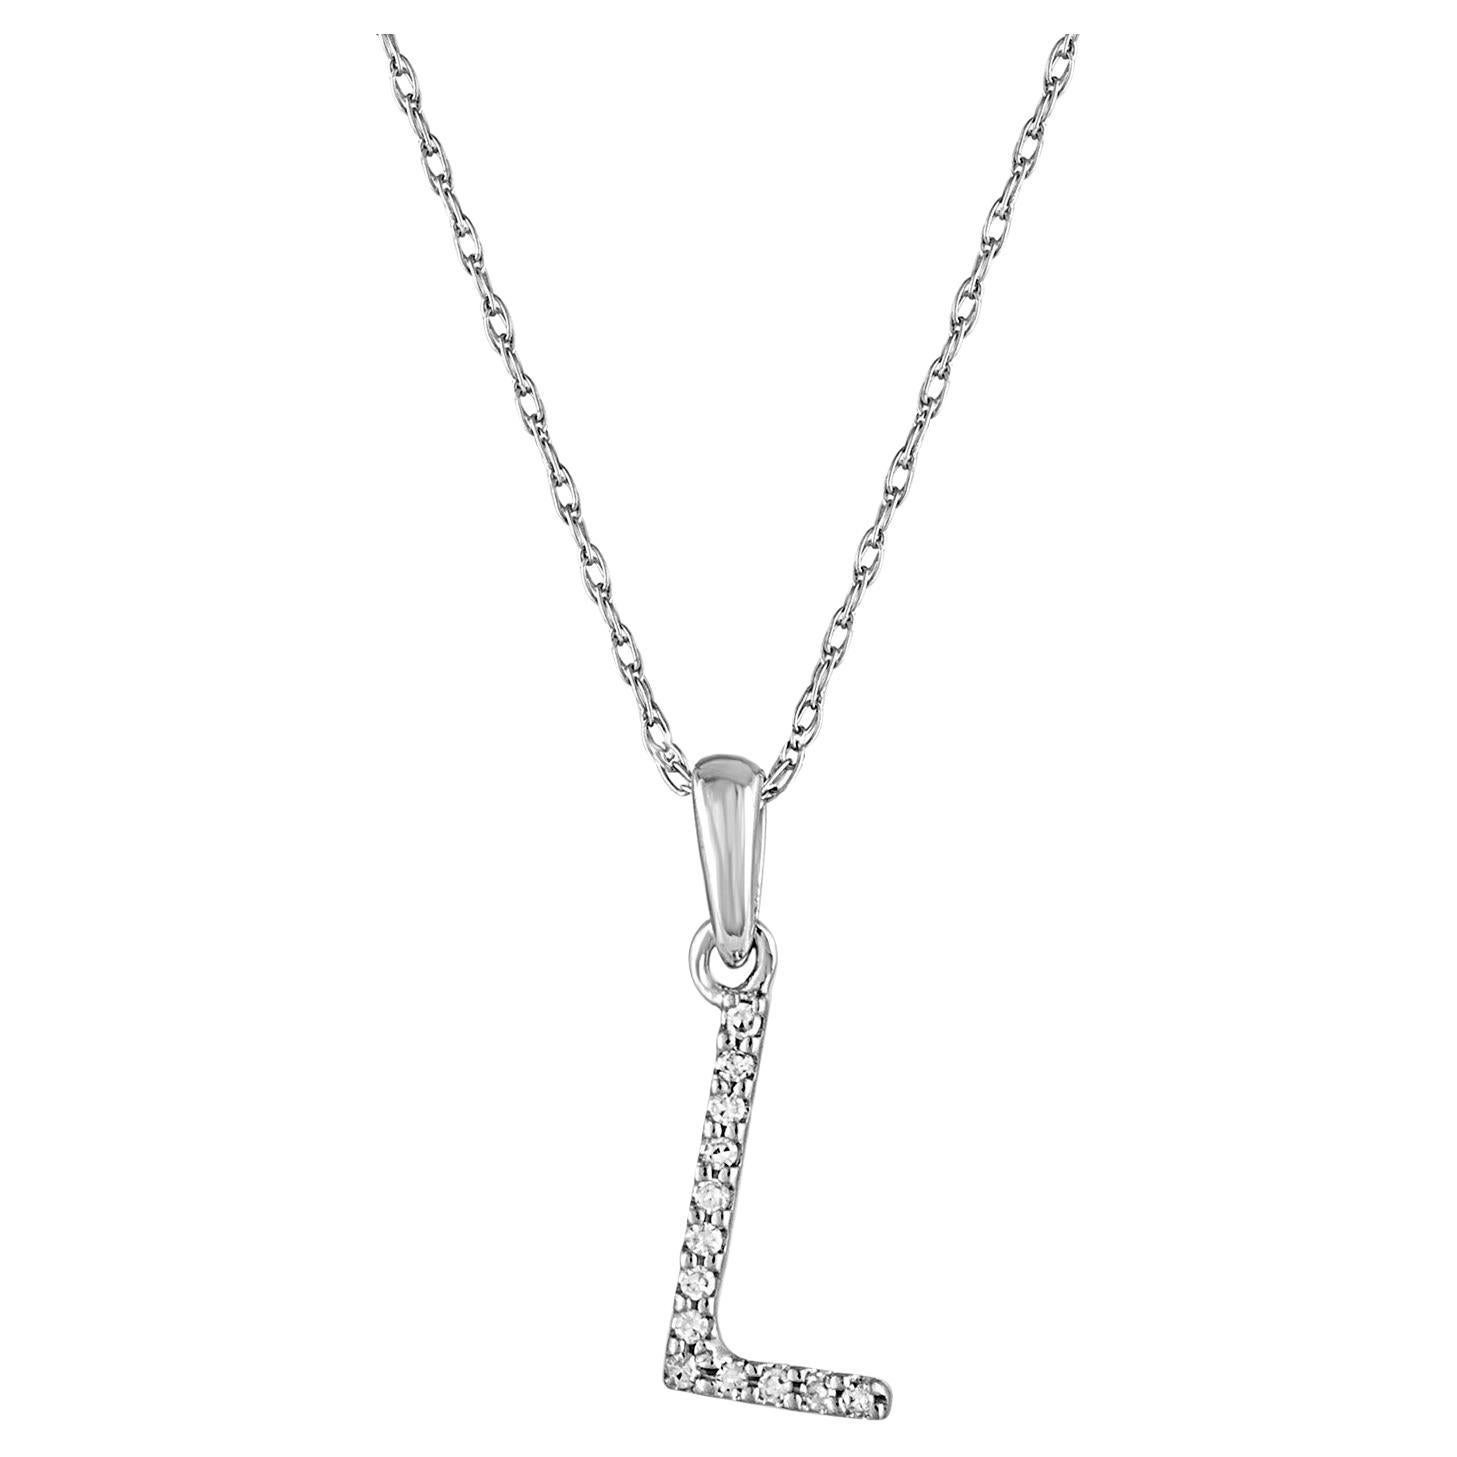 14 Karat White Gold 0.06 Carat Diamond Initial Pendant Necklace, Initial L